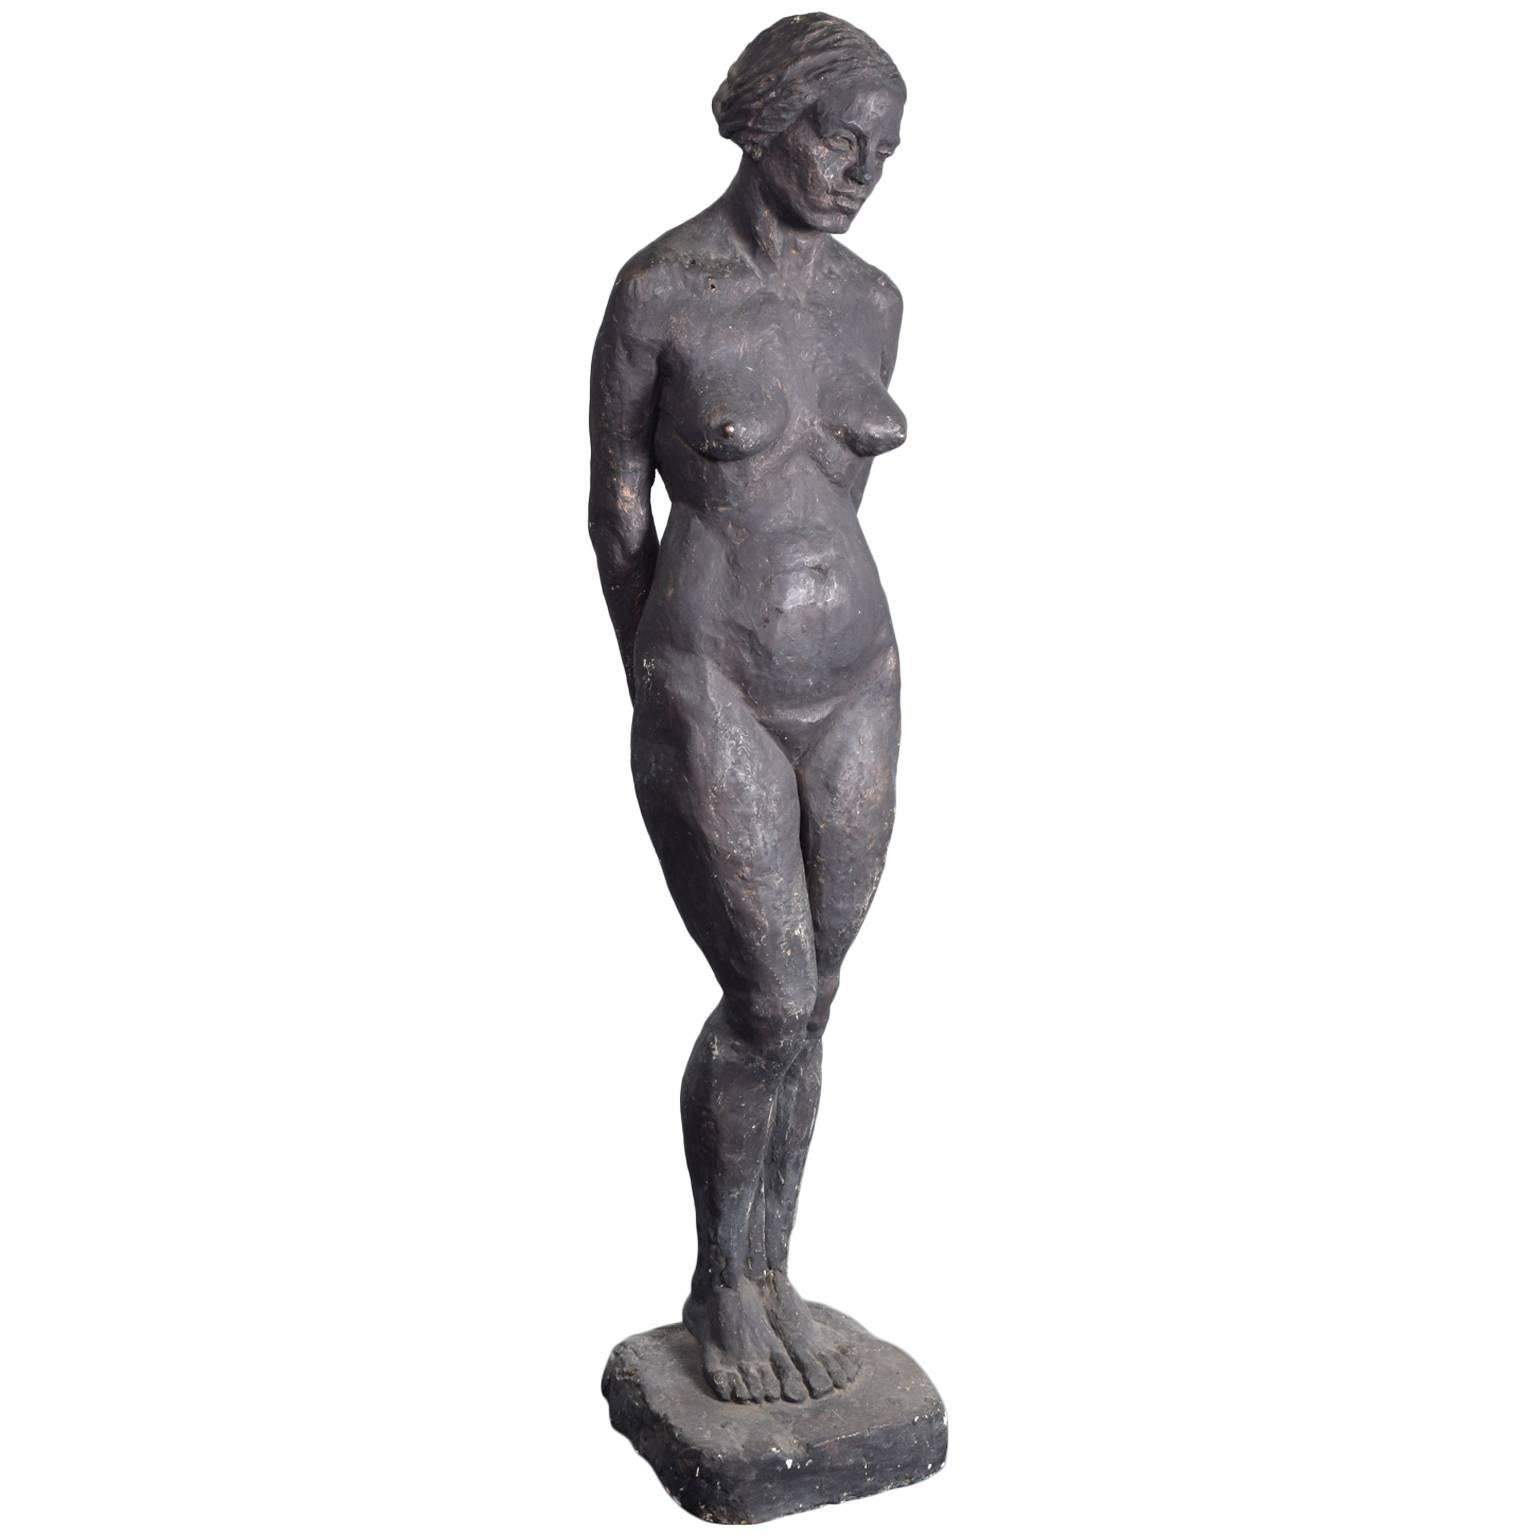 20th Century Lifesize Plaster Female Nude Sculpture